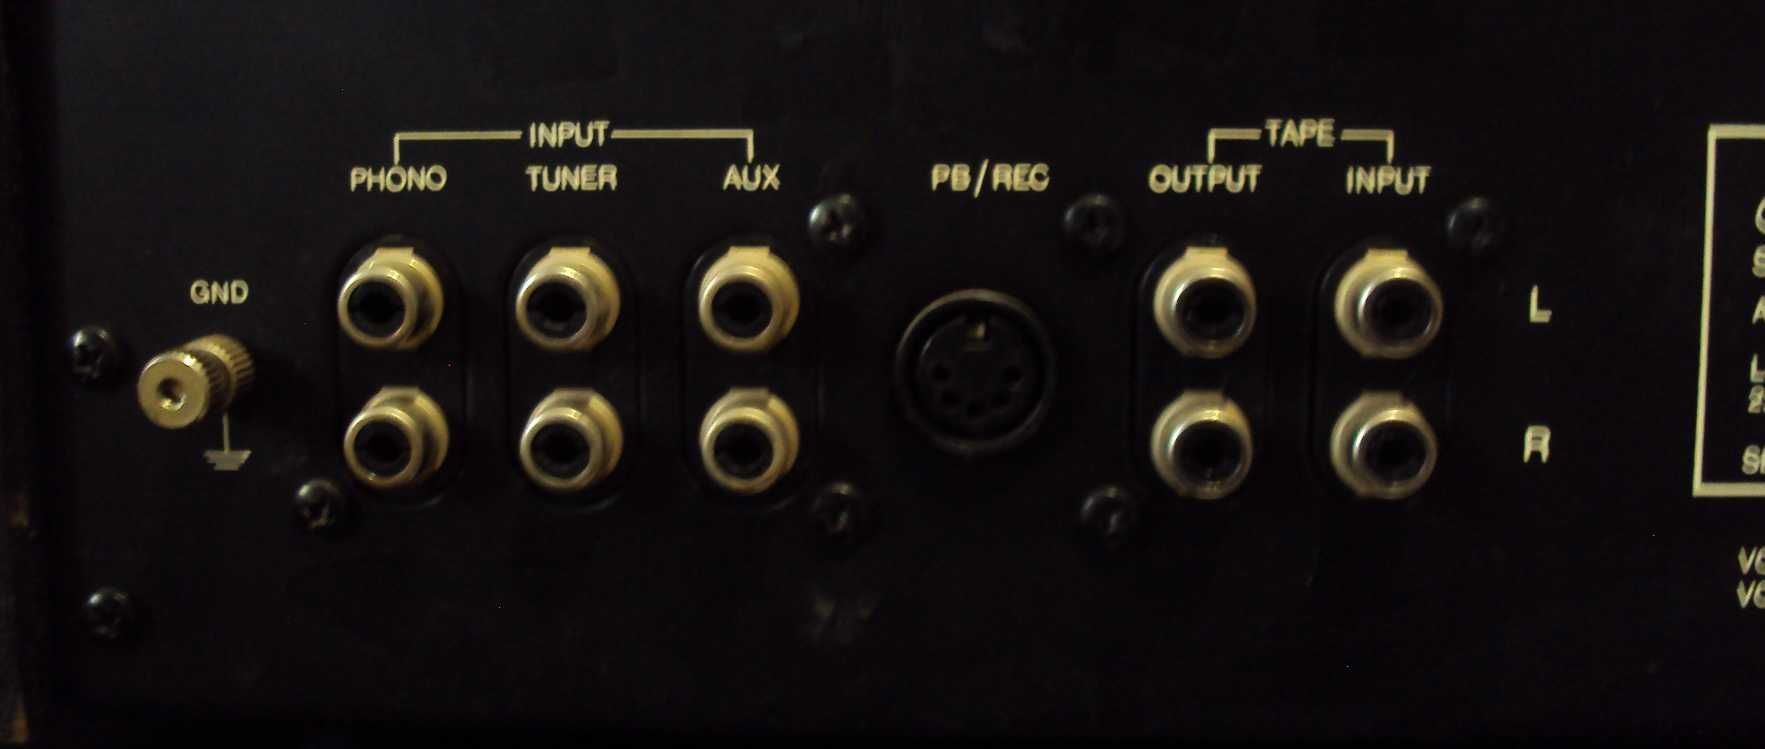 Audion  A-200 stereo amplifier ВИНТАЖ ! Стрелки.усилитель.